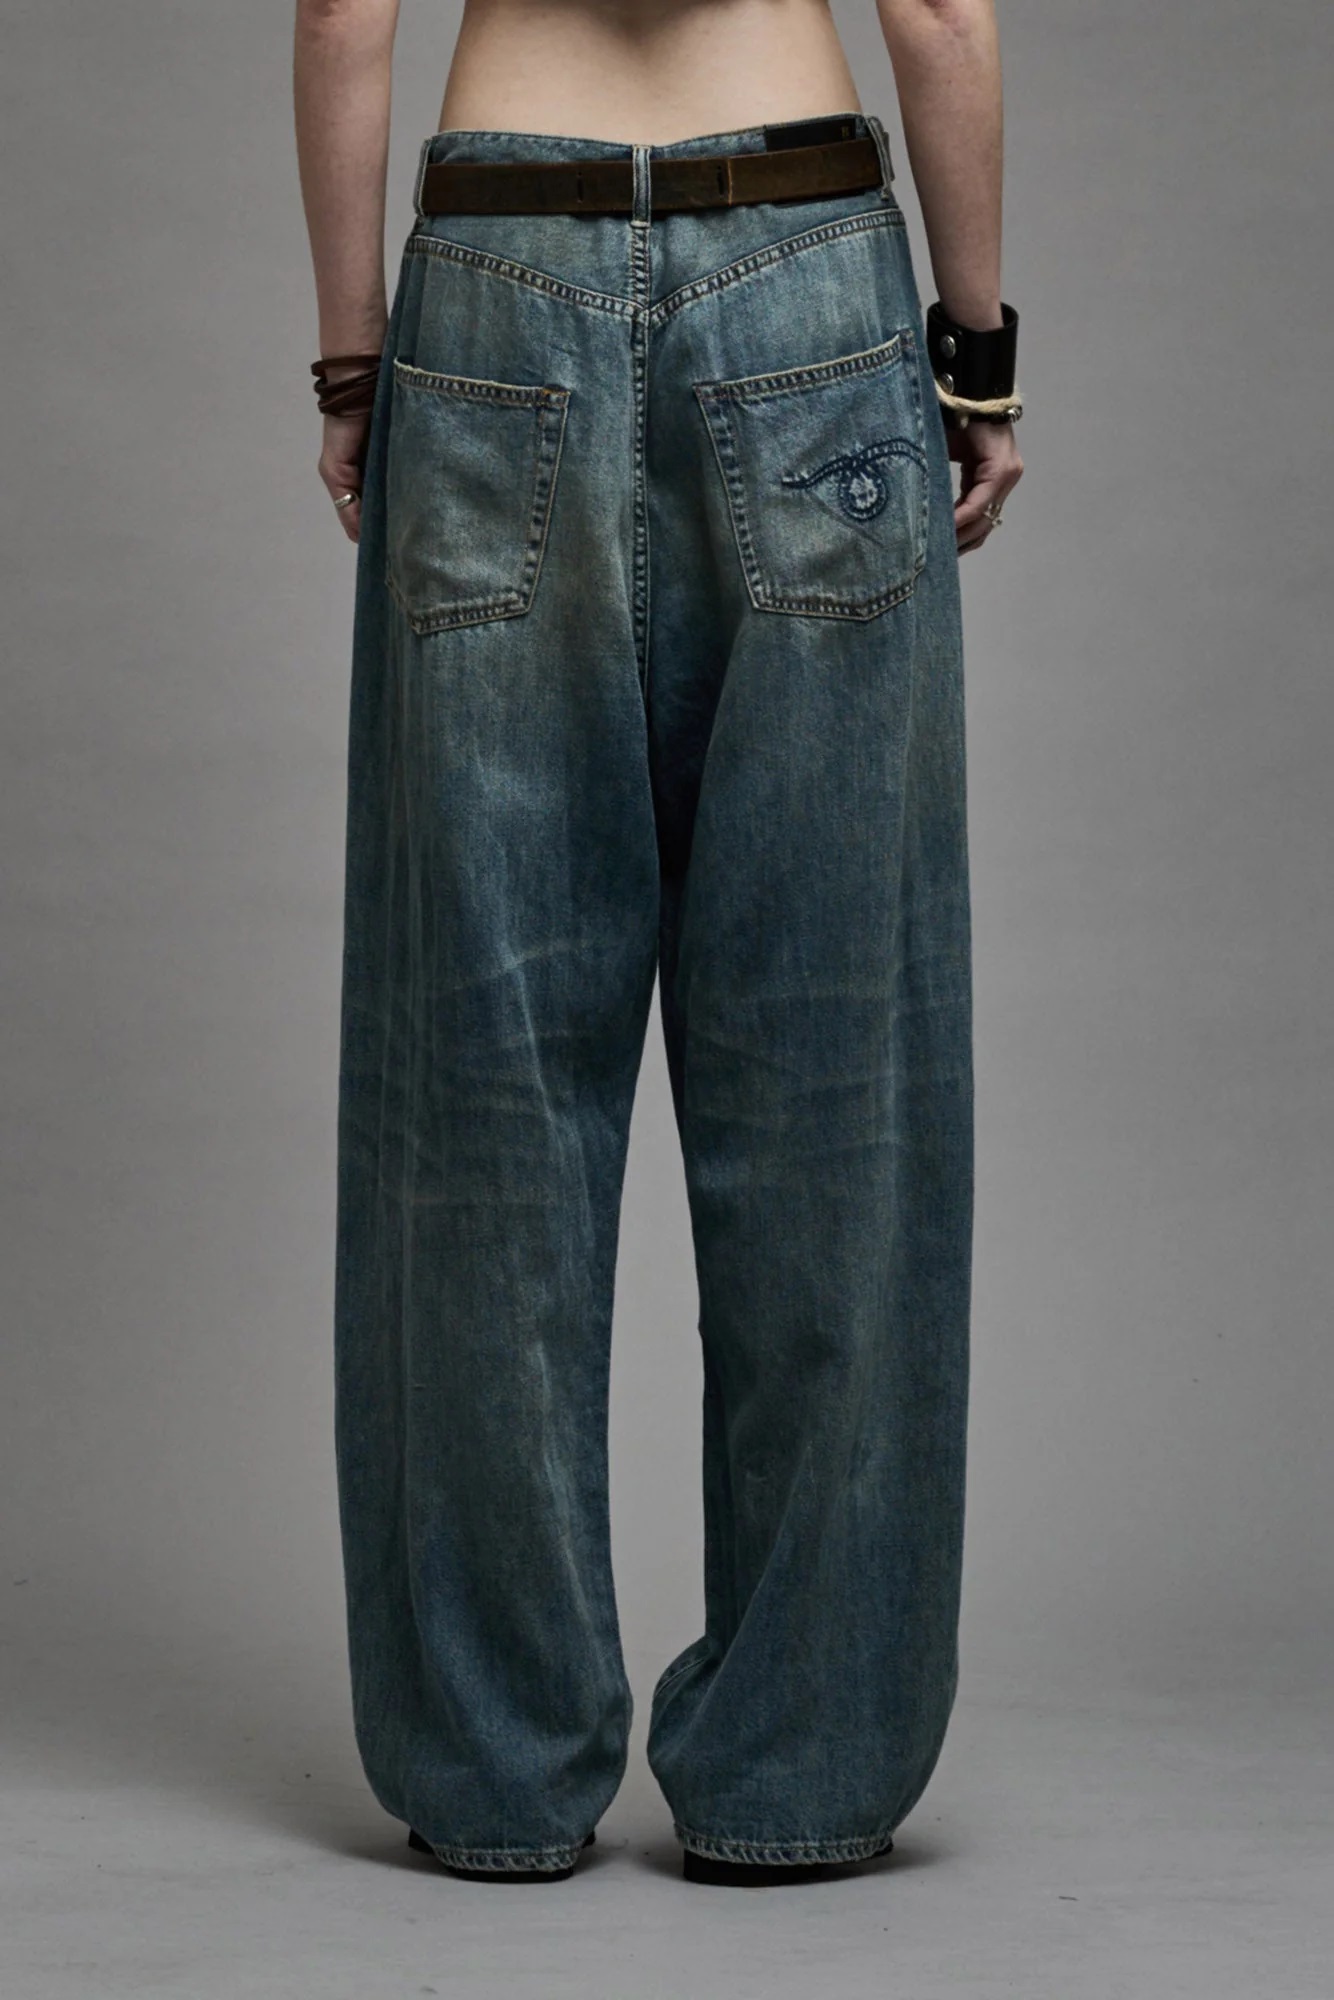 R13 Boyfriend Venti Jeans in Weber Linen Indigo 27